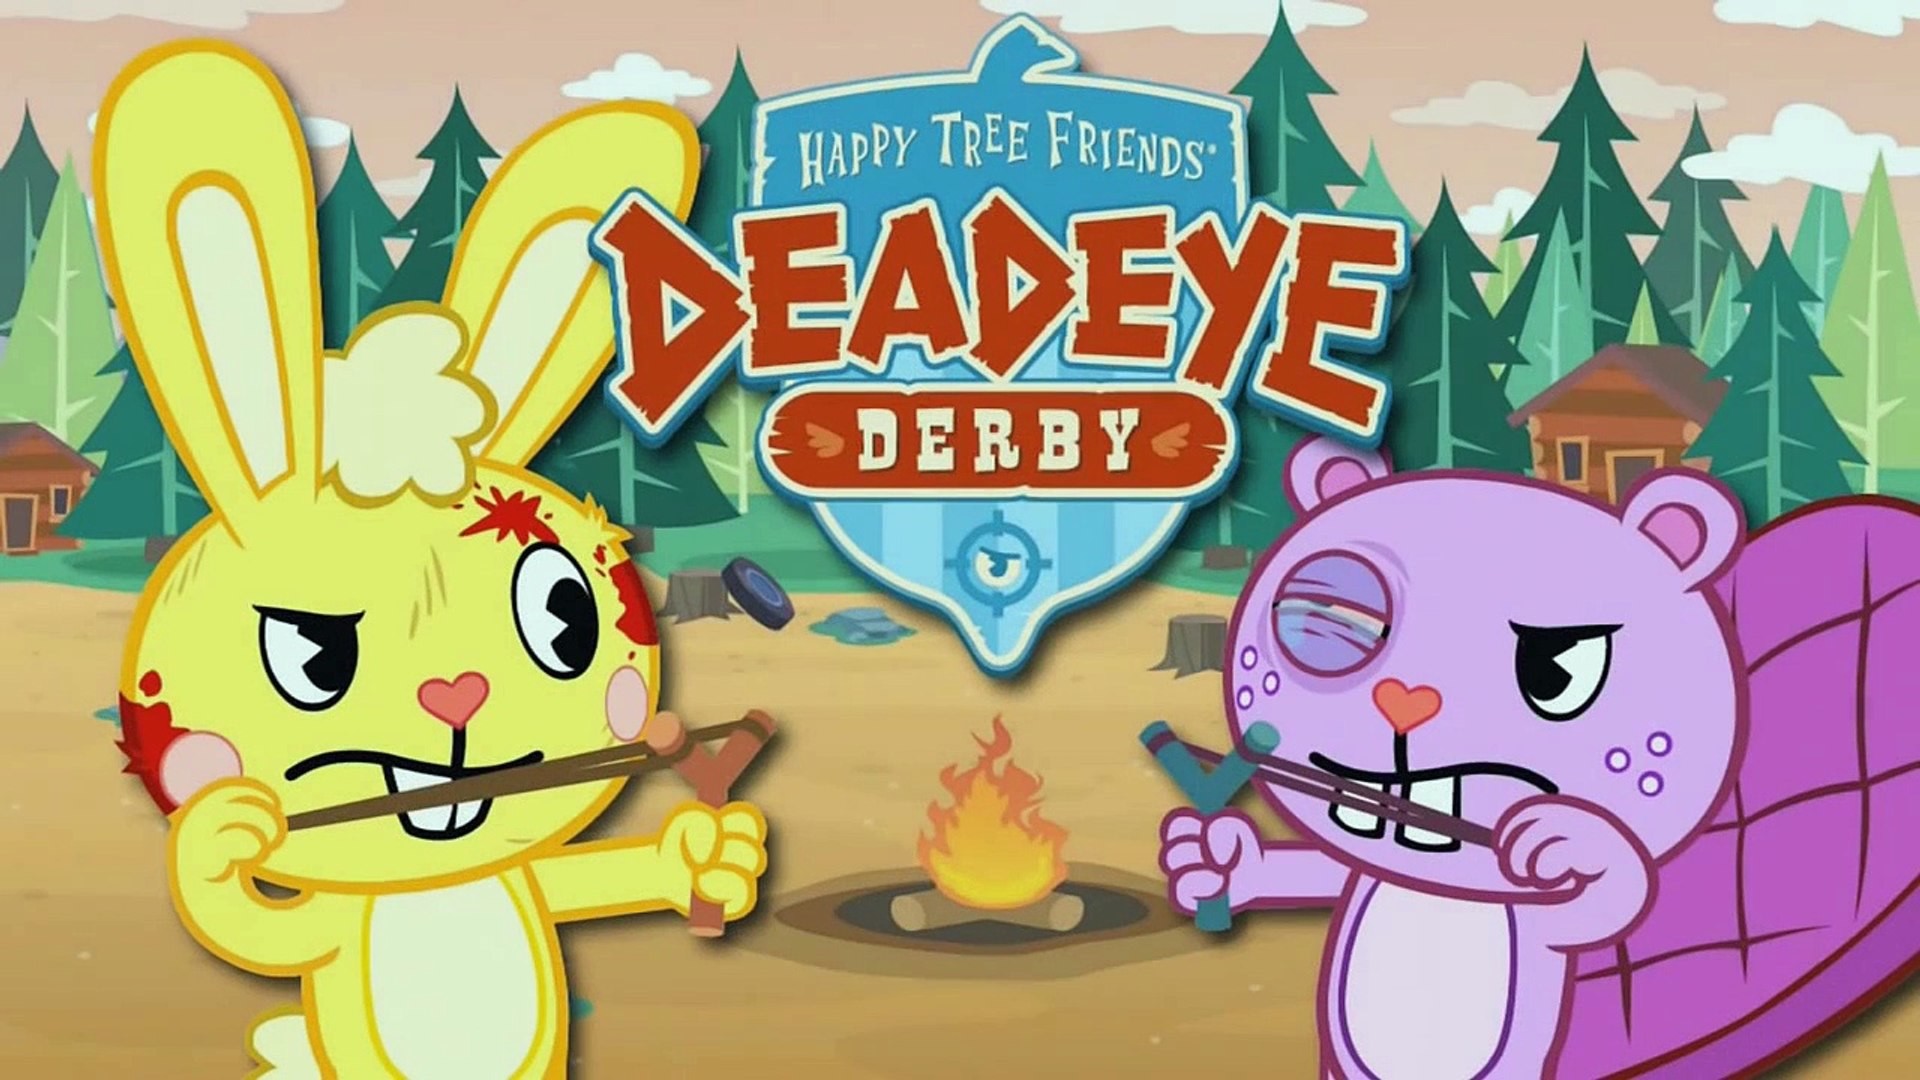 1920x1080 Happy Tree Friends: Deadeye Derby App Review (English) - Dailymotion Video